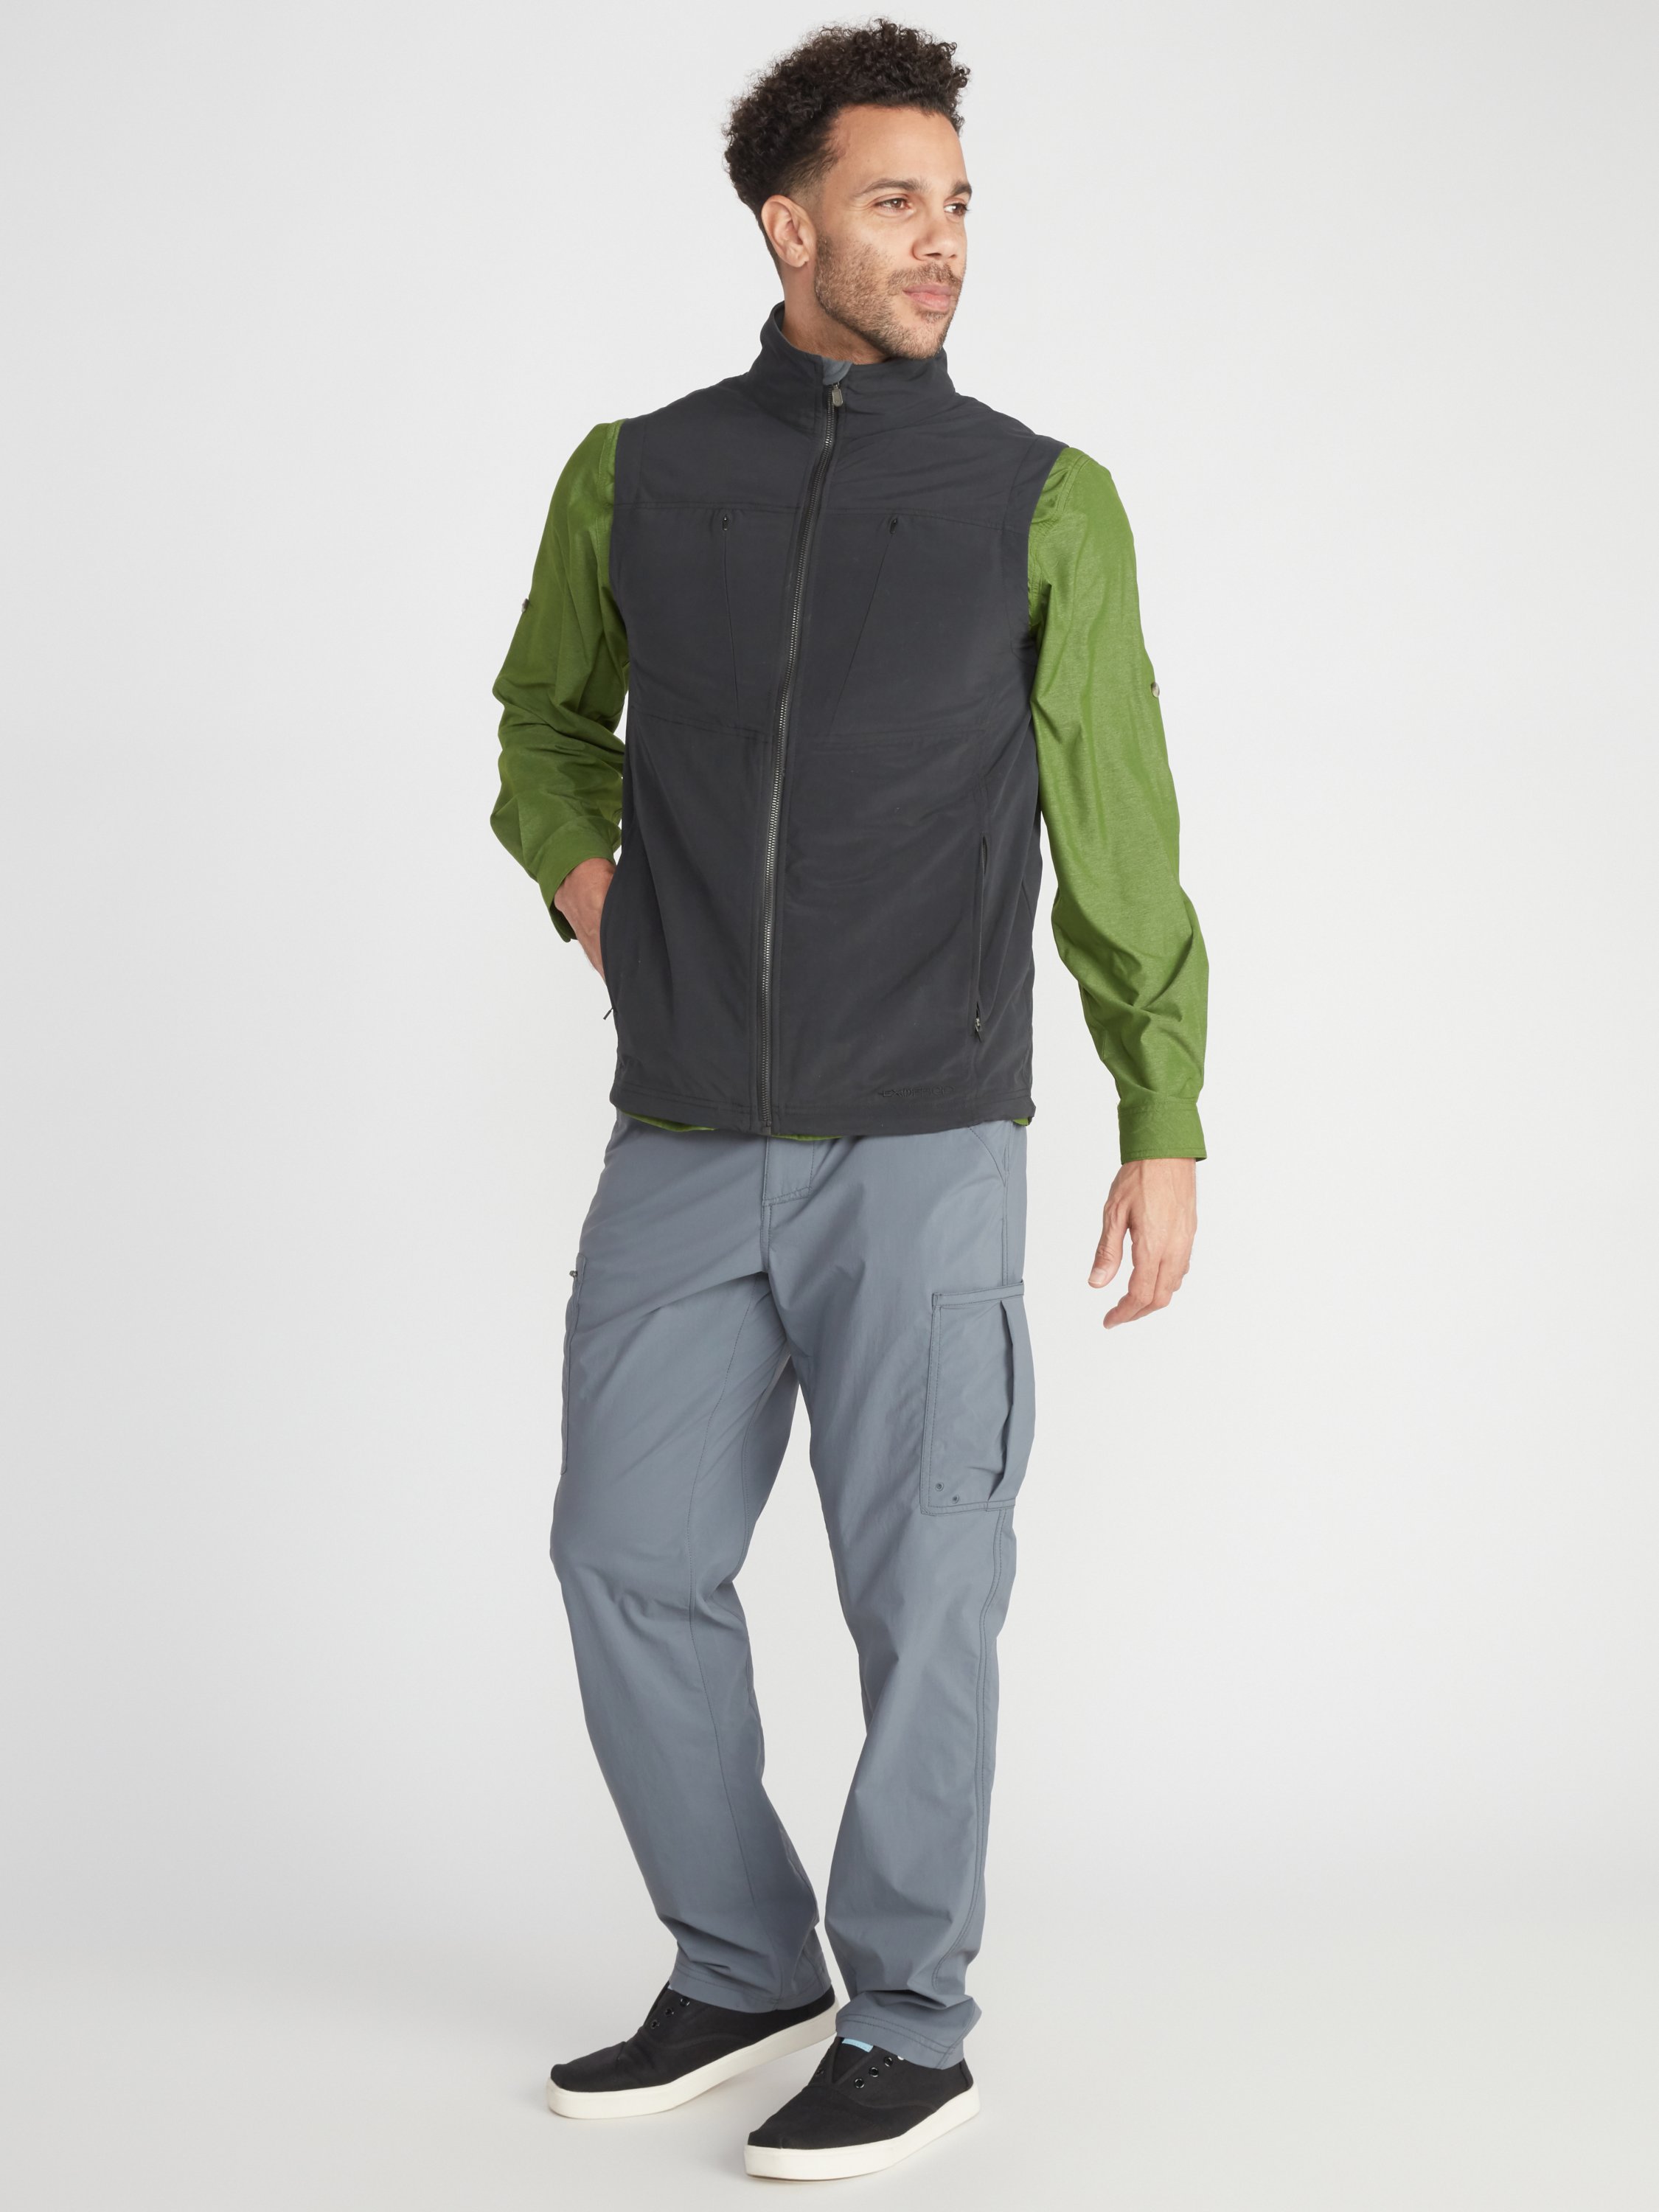  ExOfficio Men's FlyQ Convertible Jacket, Light Khaki